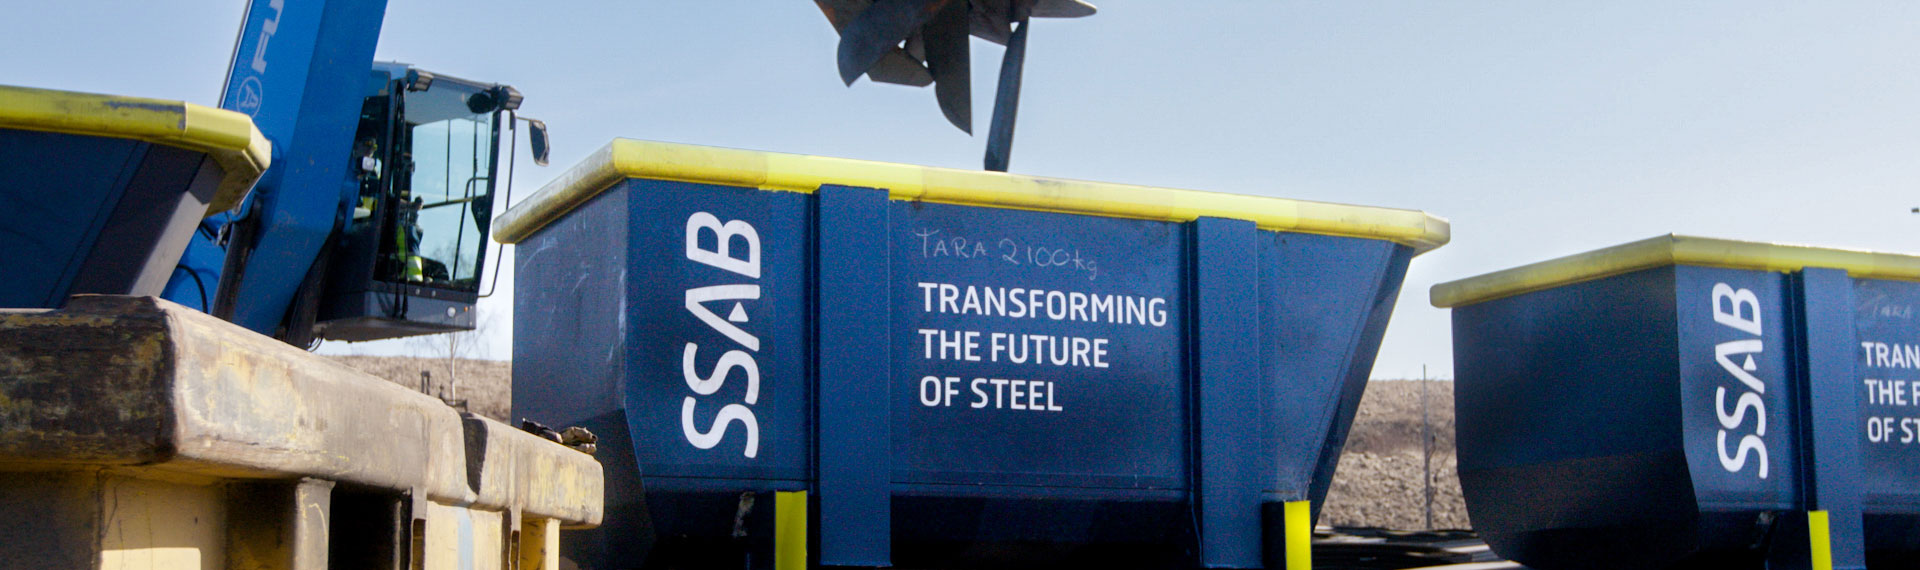 SSAB Scrap steel container